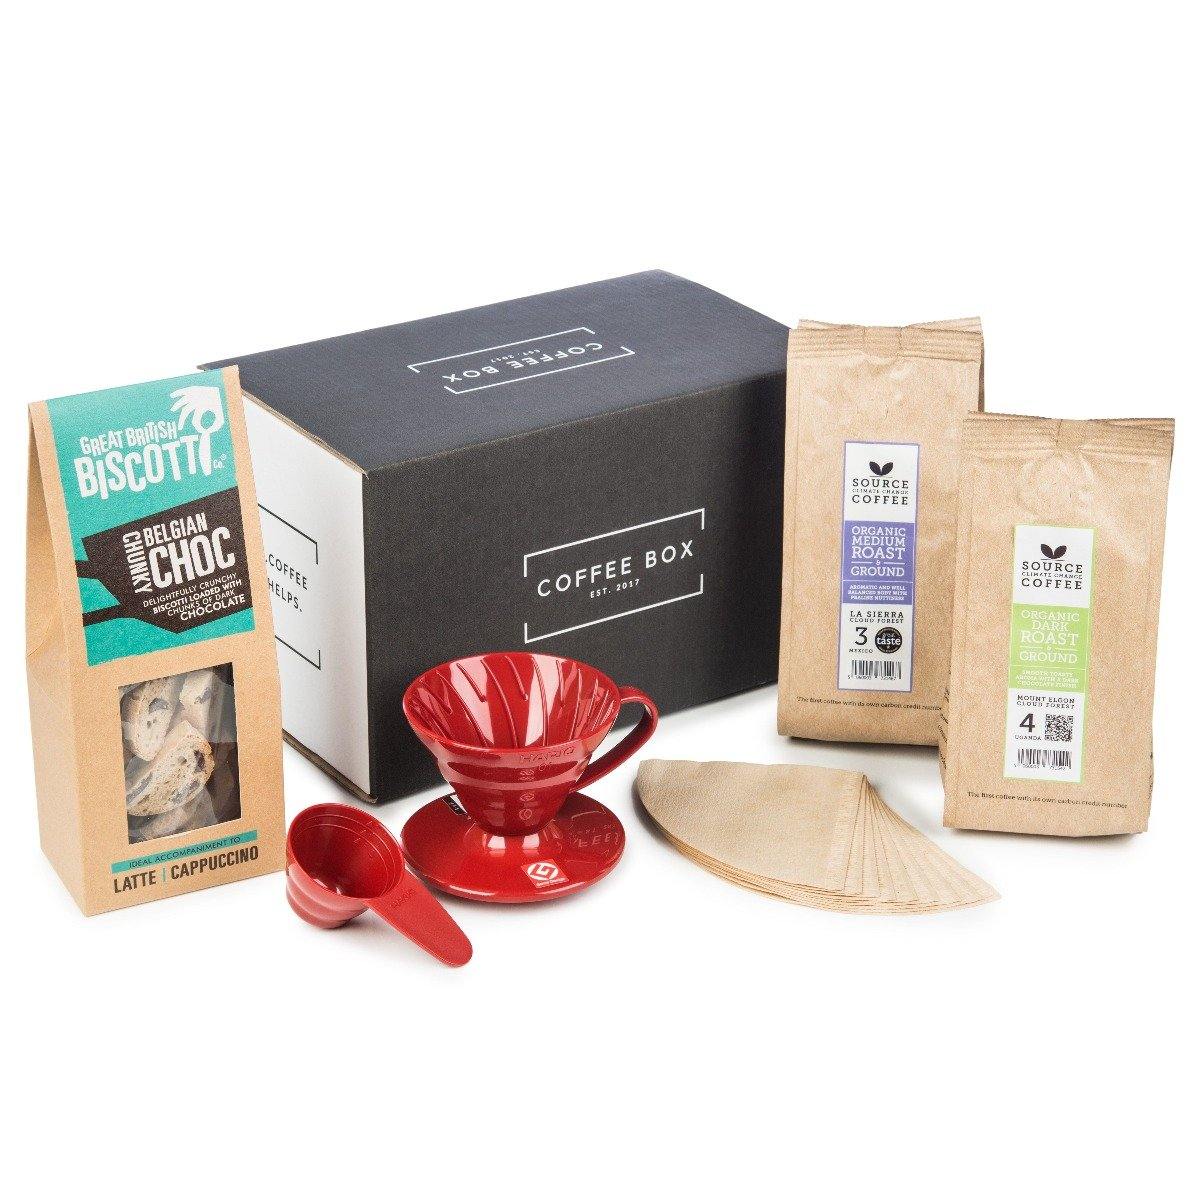 Ground Coffee & Dripper Gift Set Coffee Box